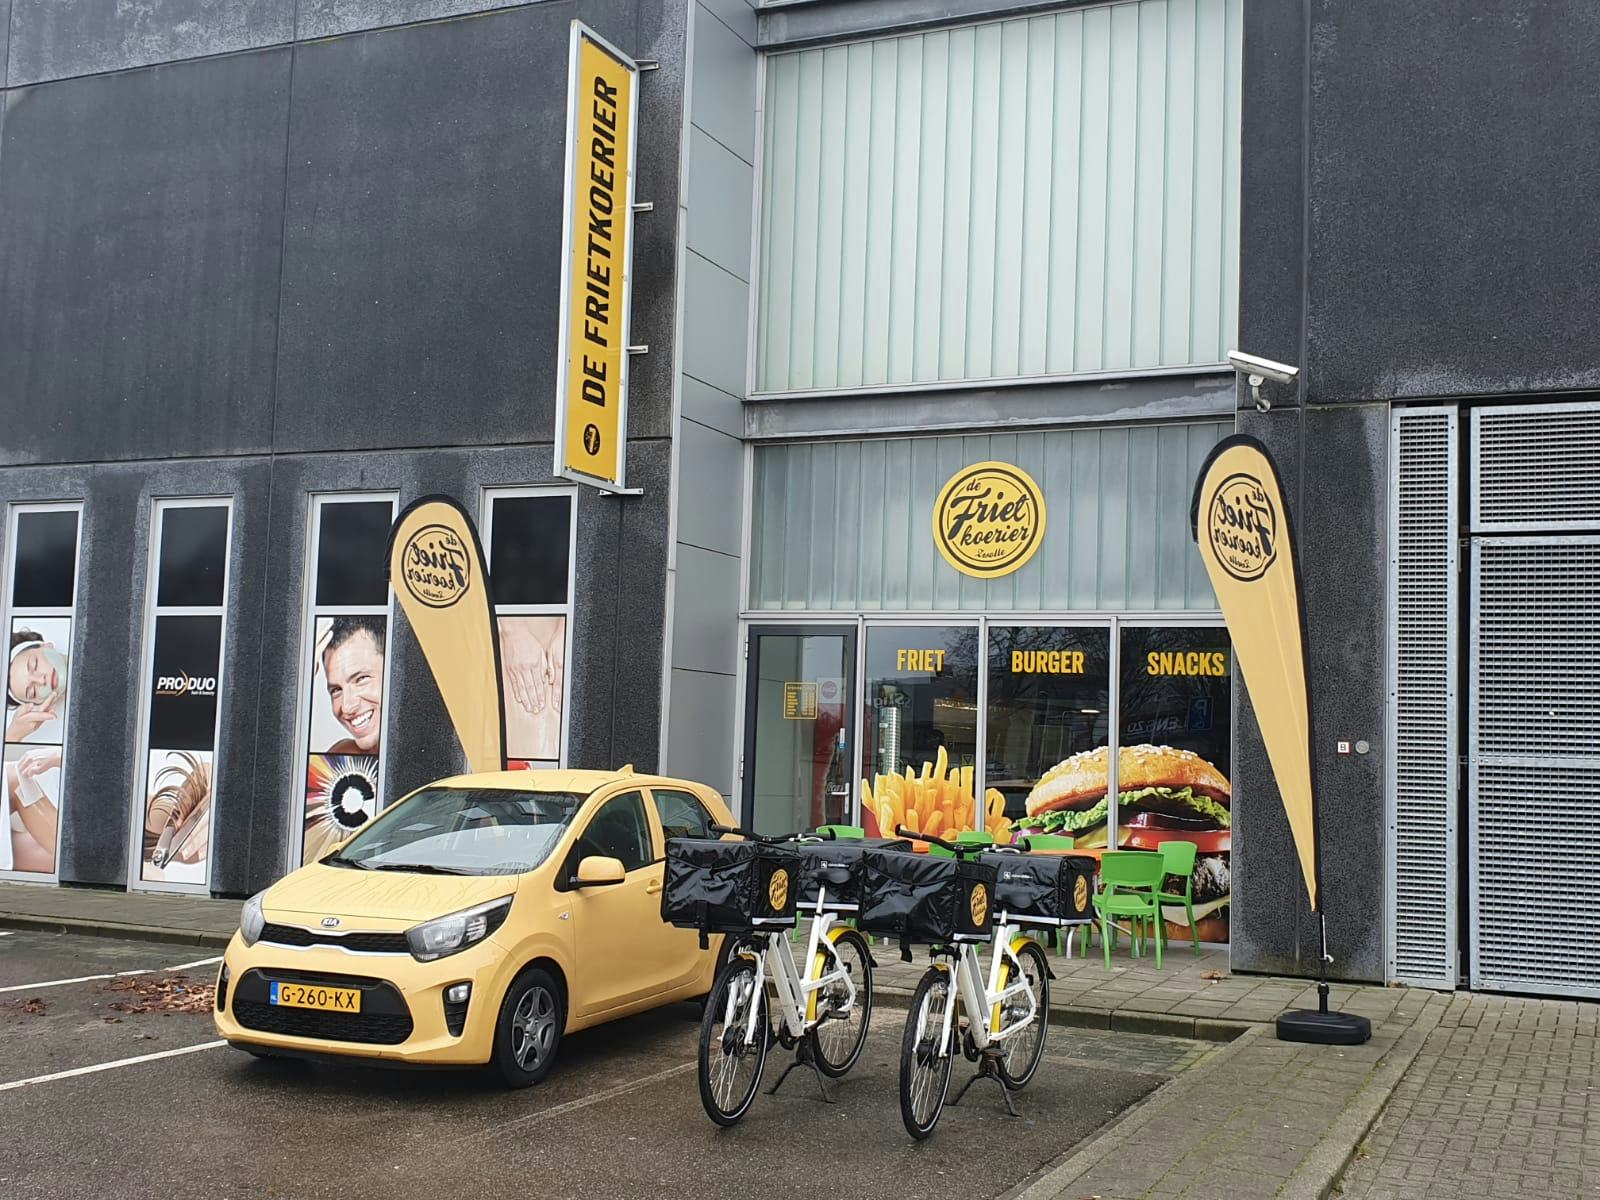 Cafetaria-ondernemer opent de Frietkoerier in stadion PEC Zwolle